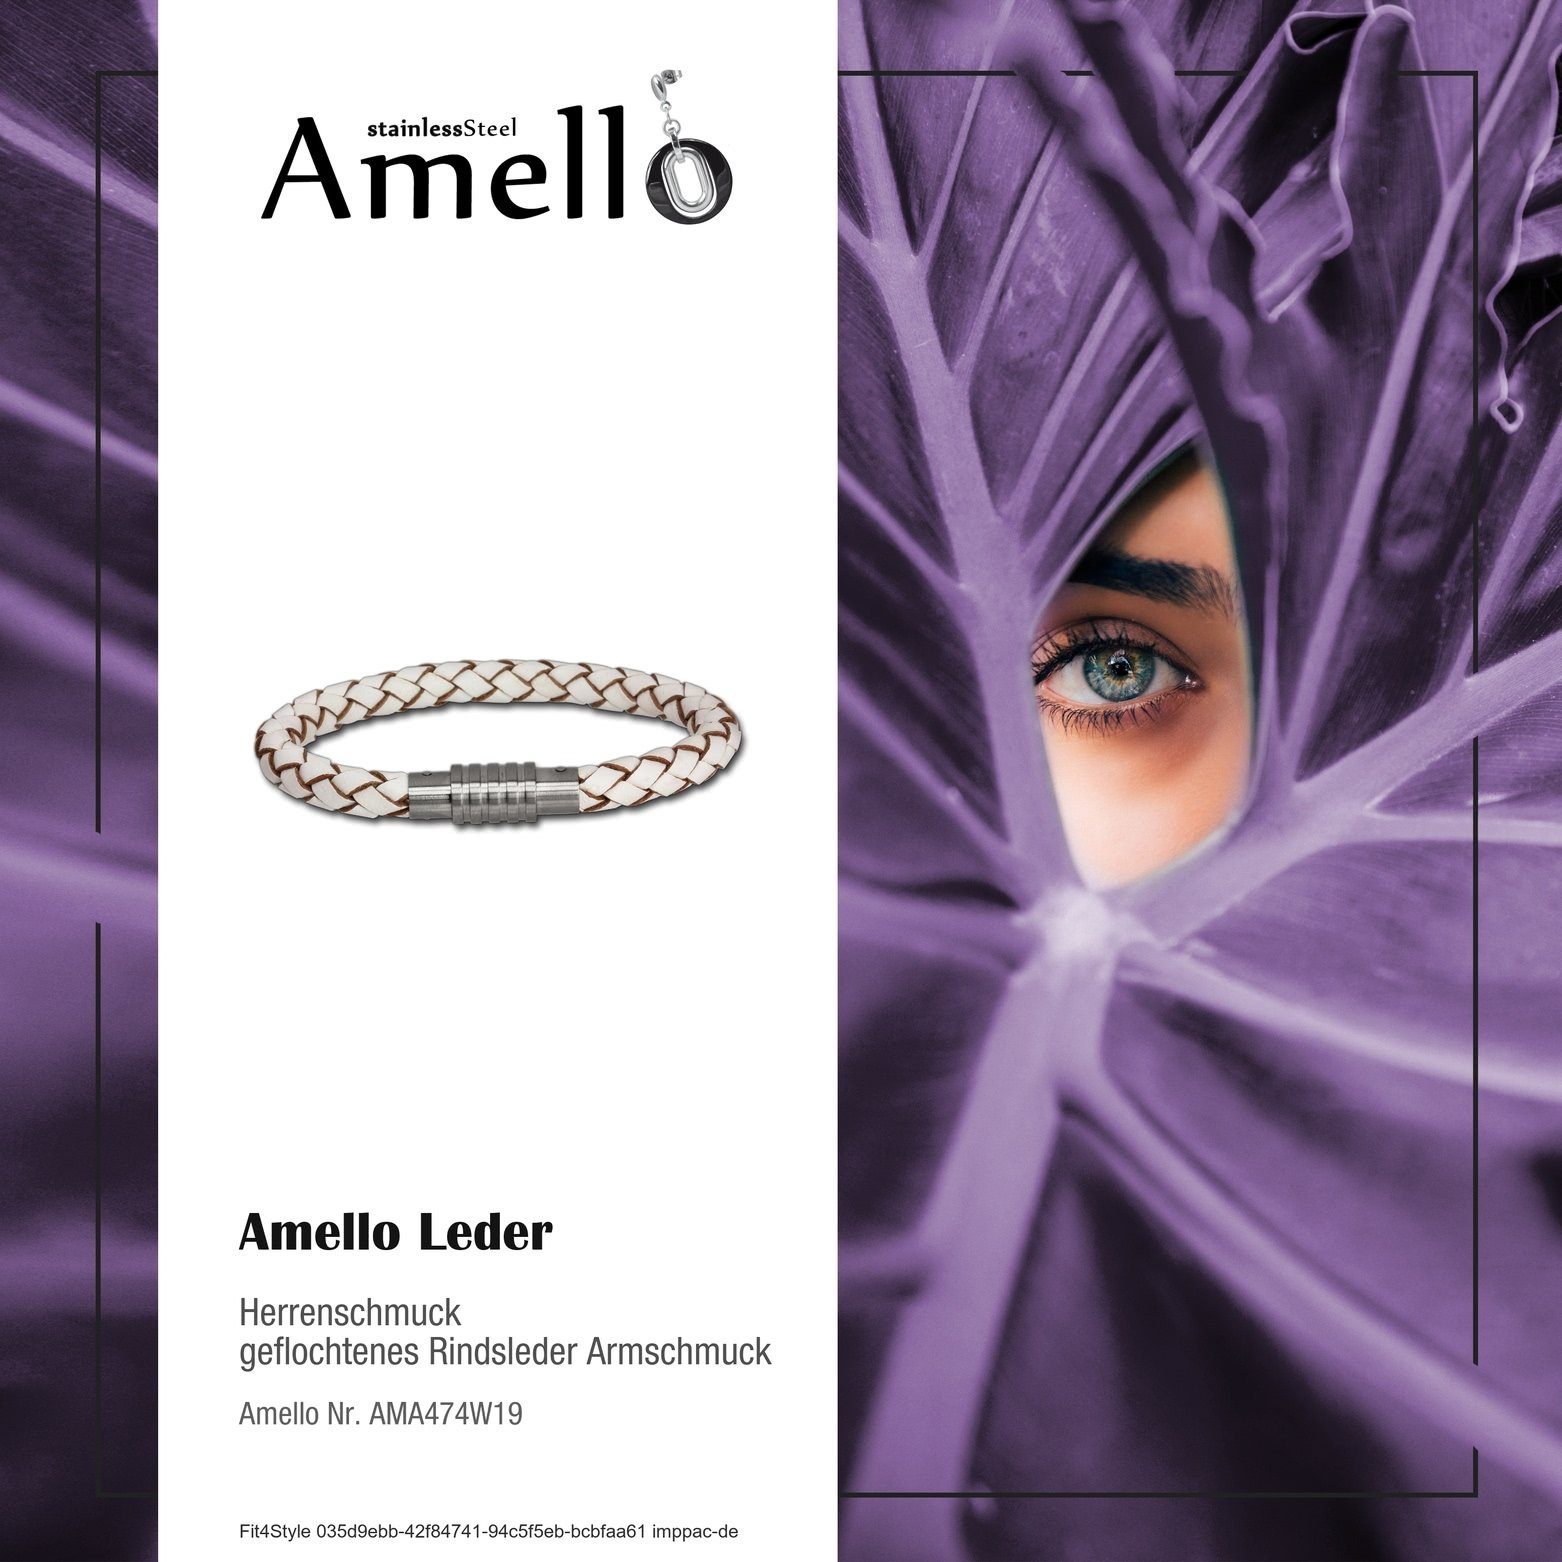 Farbe: Armband 19cm, (Armband), Amello weiß Edelstahlarmband Steel), Herren ca. Armschmuck (Stainless Edelstahl Armband Amello Herren weiß